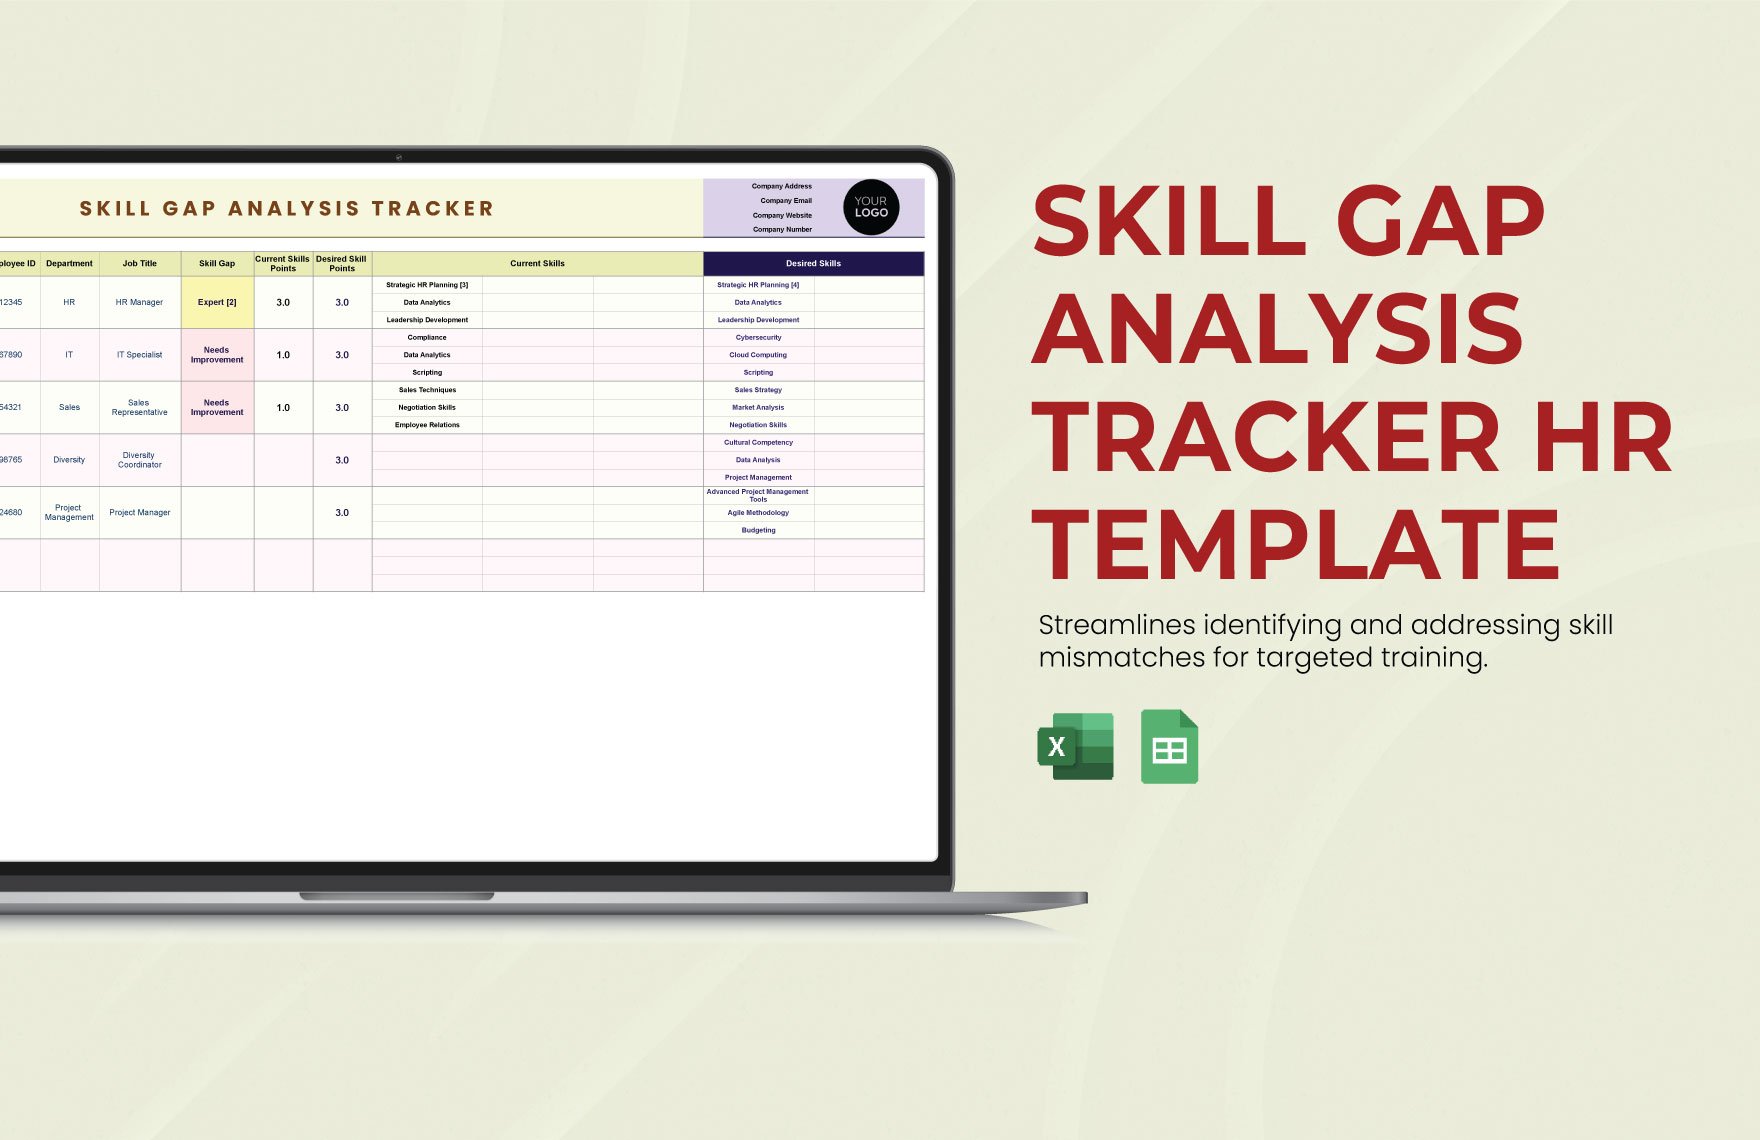 Skill Gap Analysis Tracker HR Template